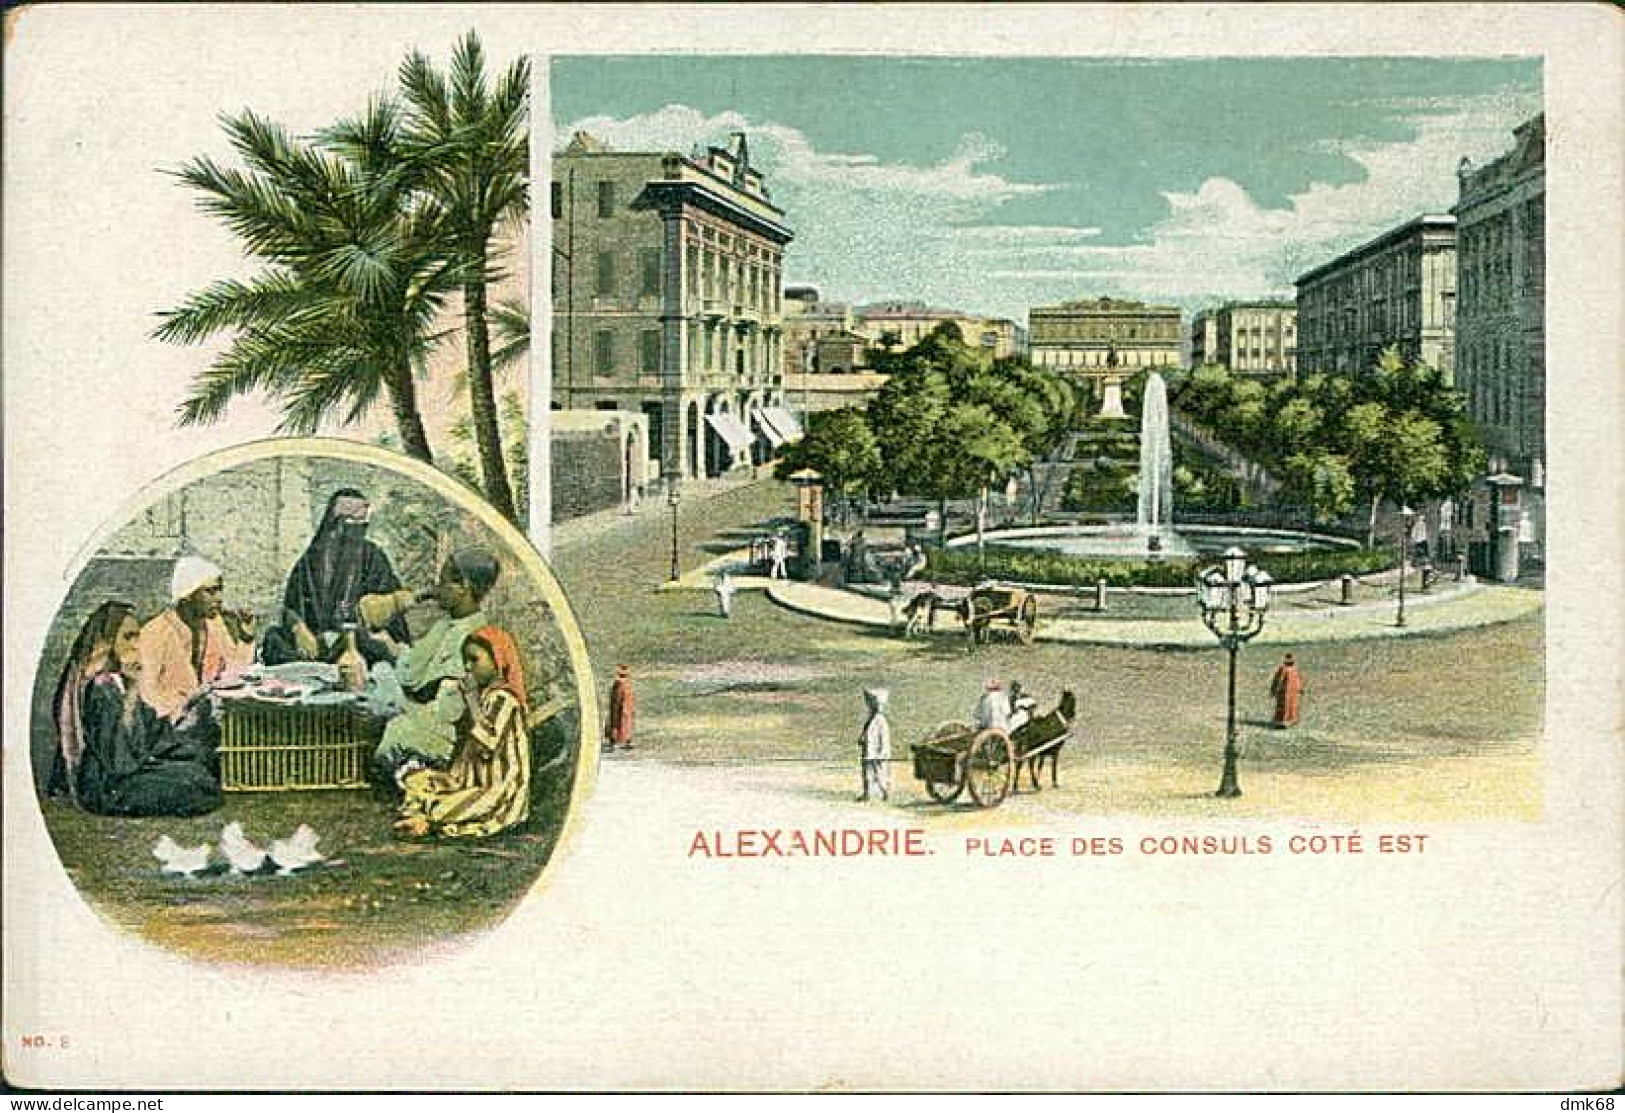 EGYPT - ALEXANDRIA / ALEXANDRIE - PLACE DES CONSULS COTE EST - 1900s (12636) - Alexandria